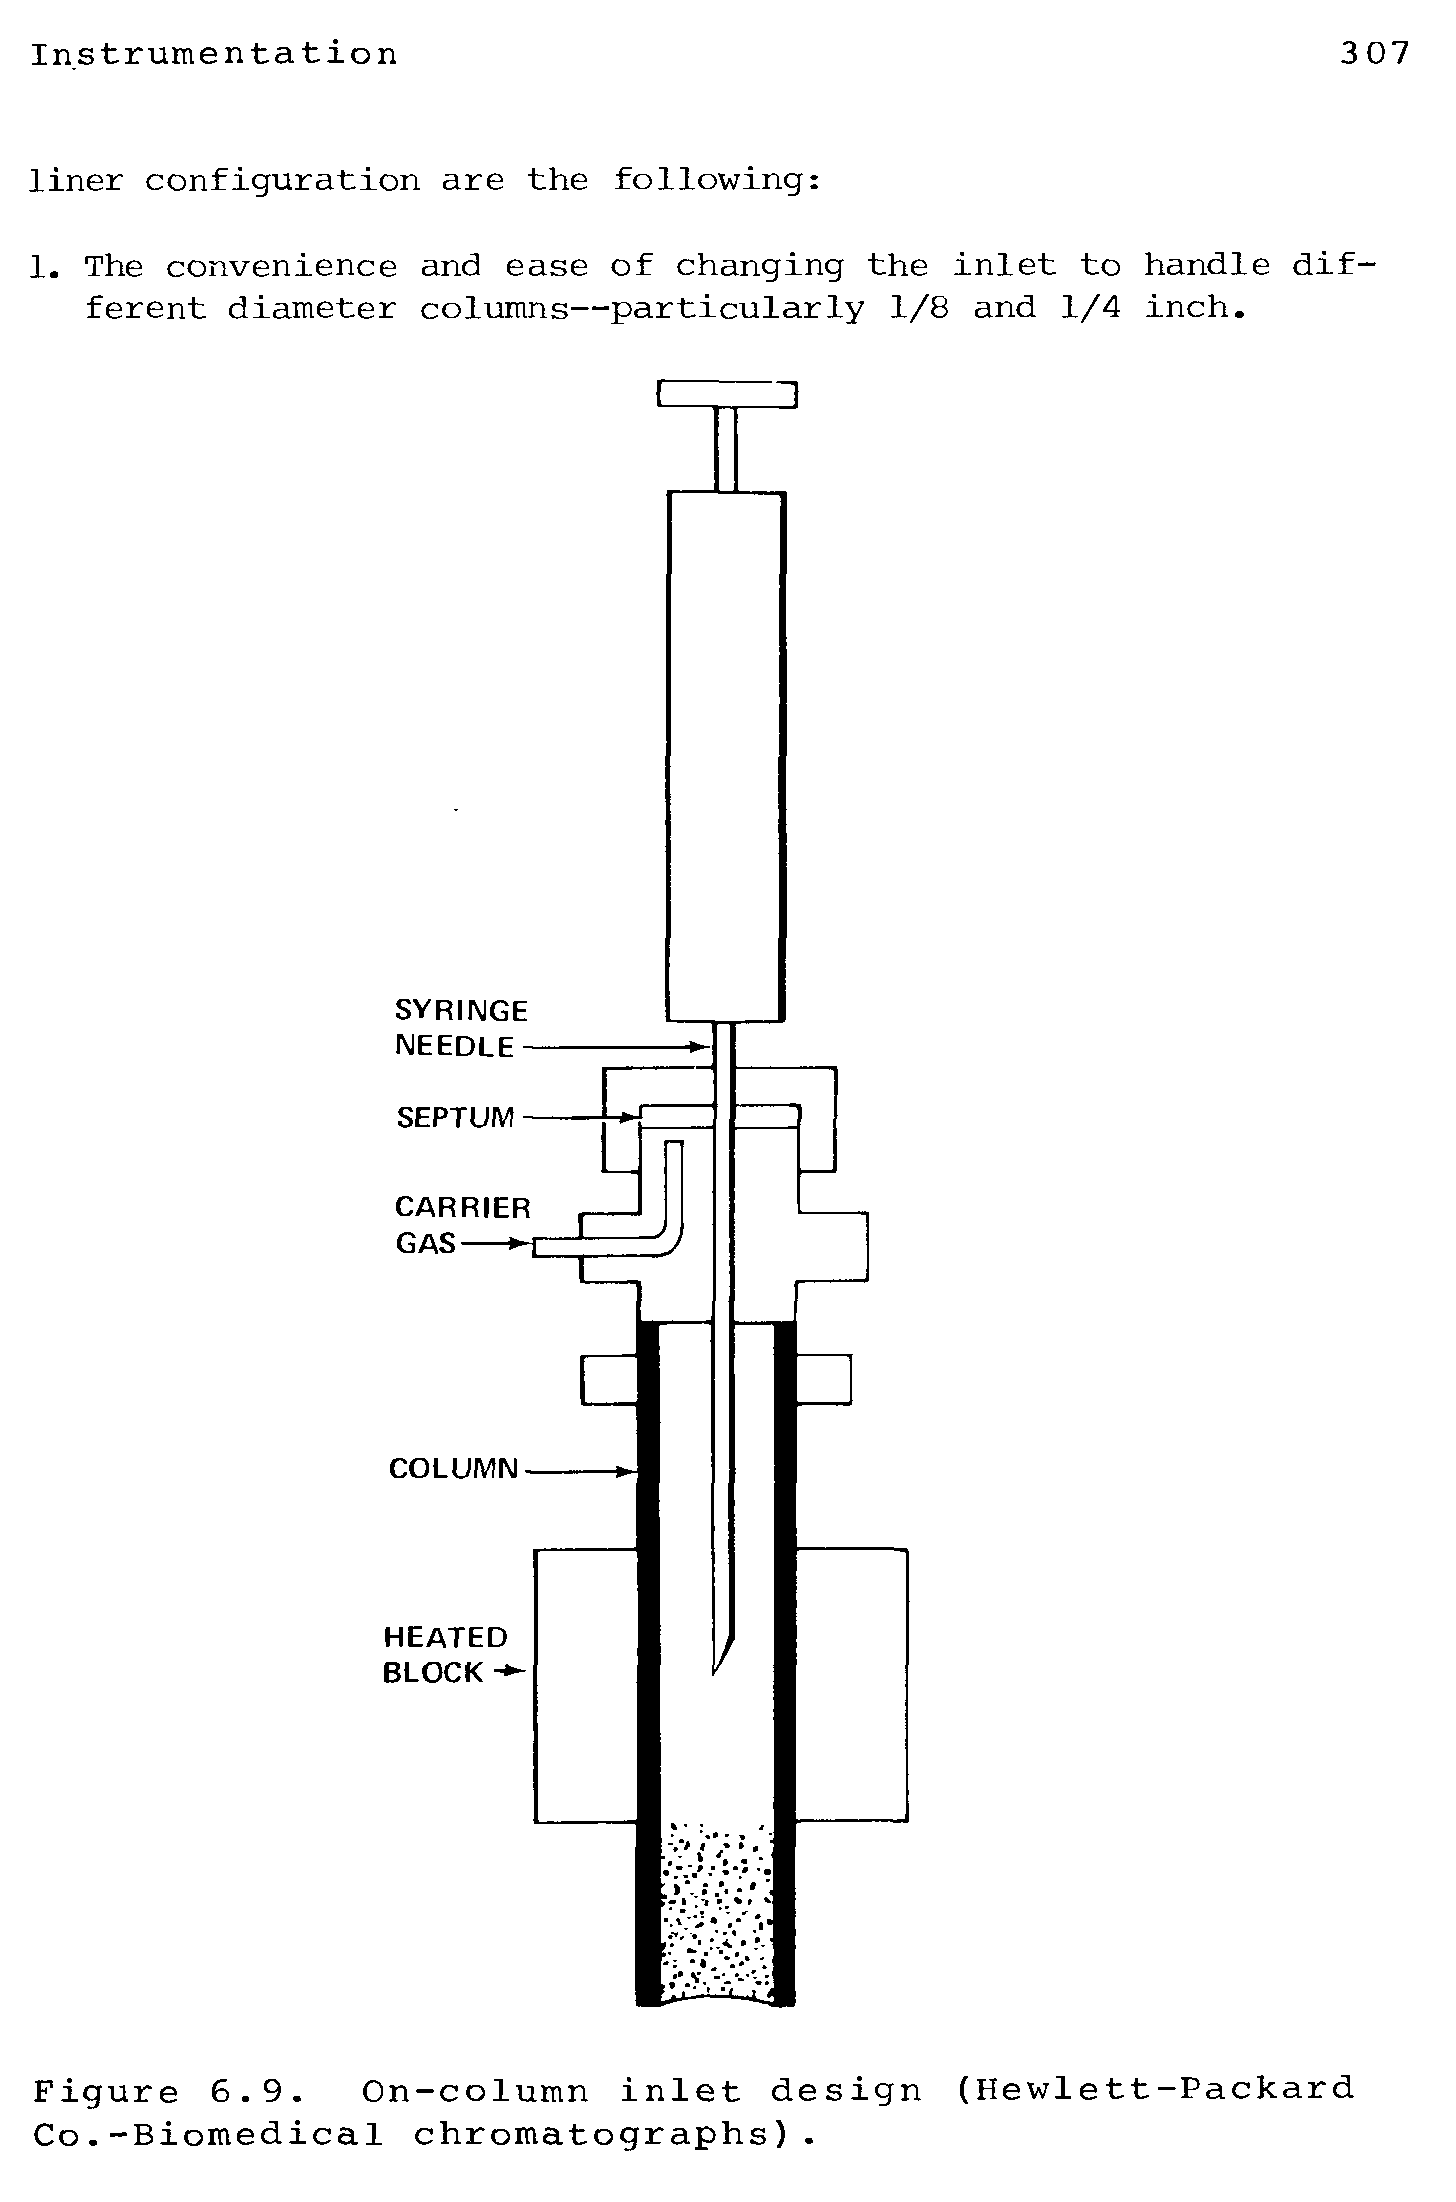 Figure 6.9. On-column inlet design (Hewlett-Packard Co.-Biomedical chromatographs).